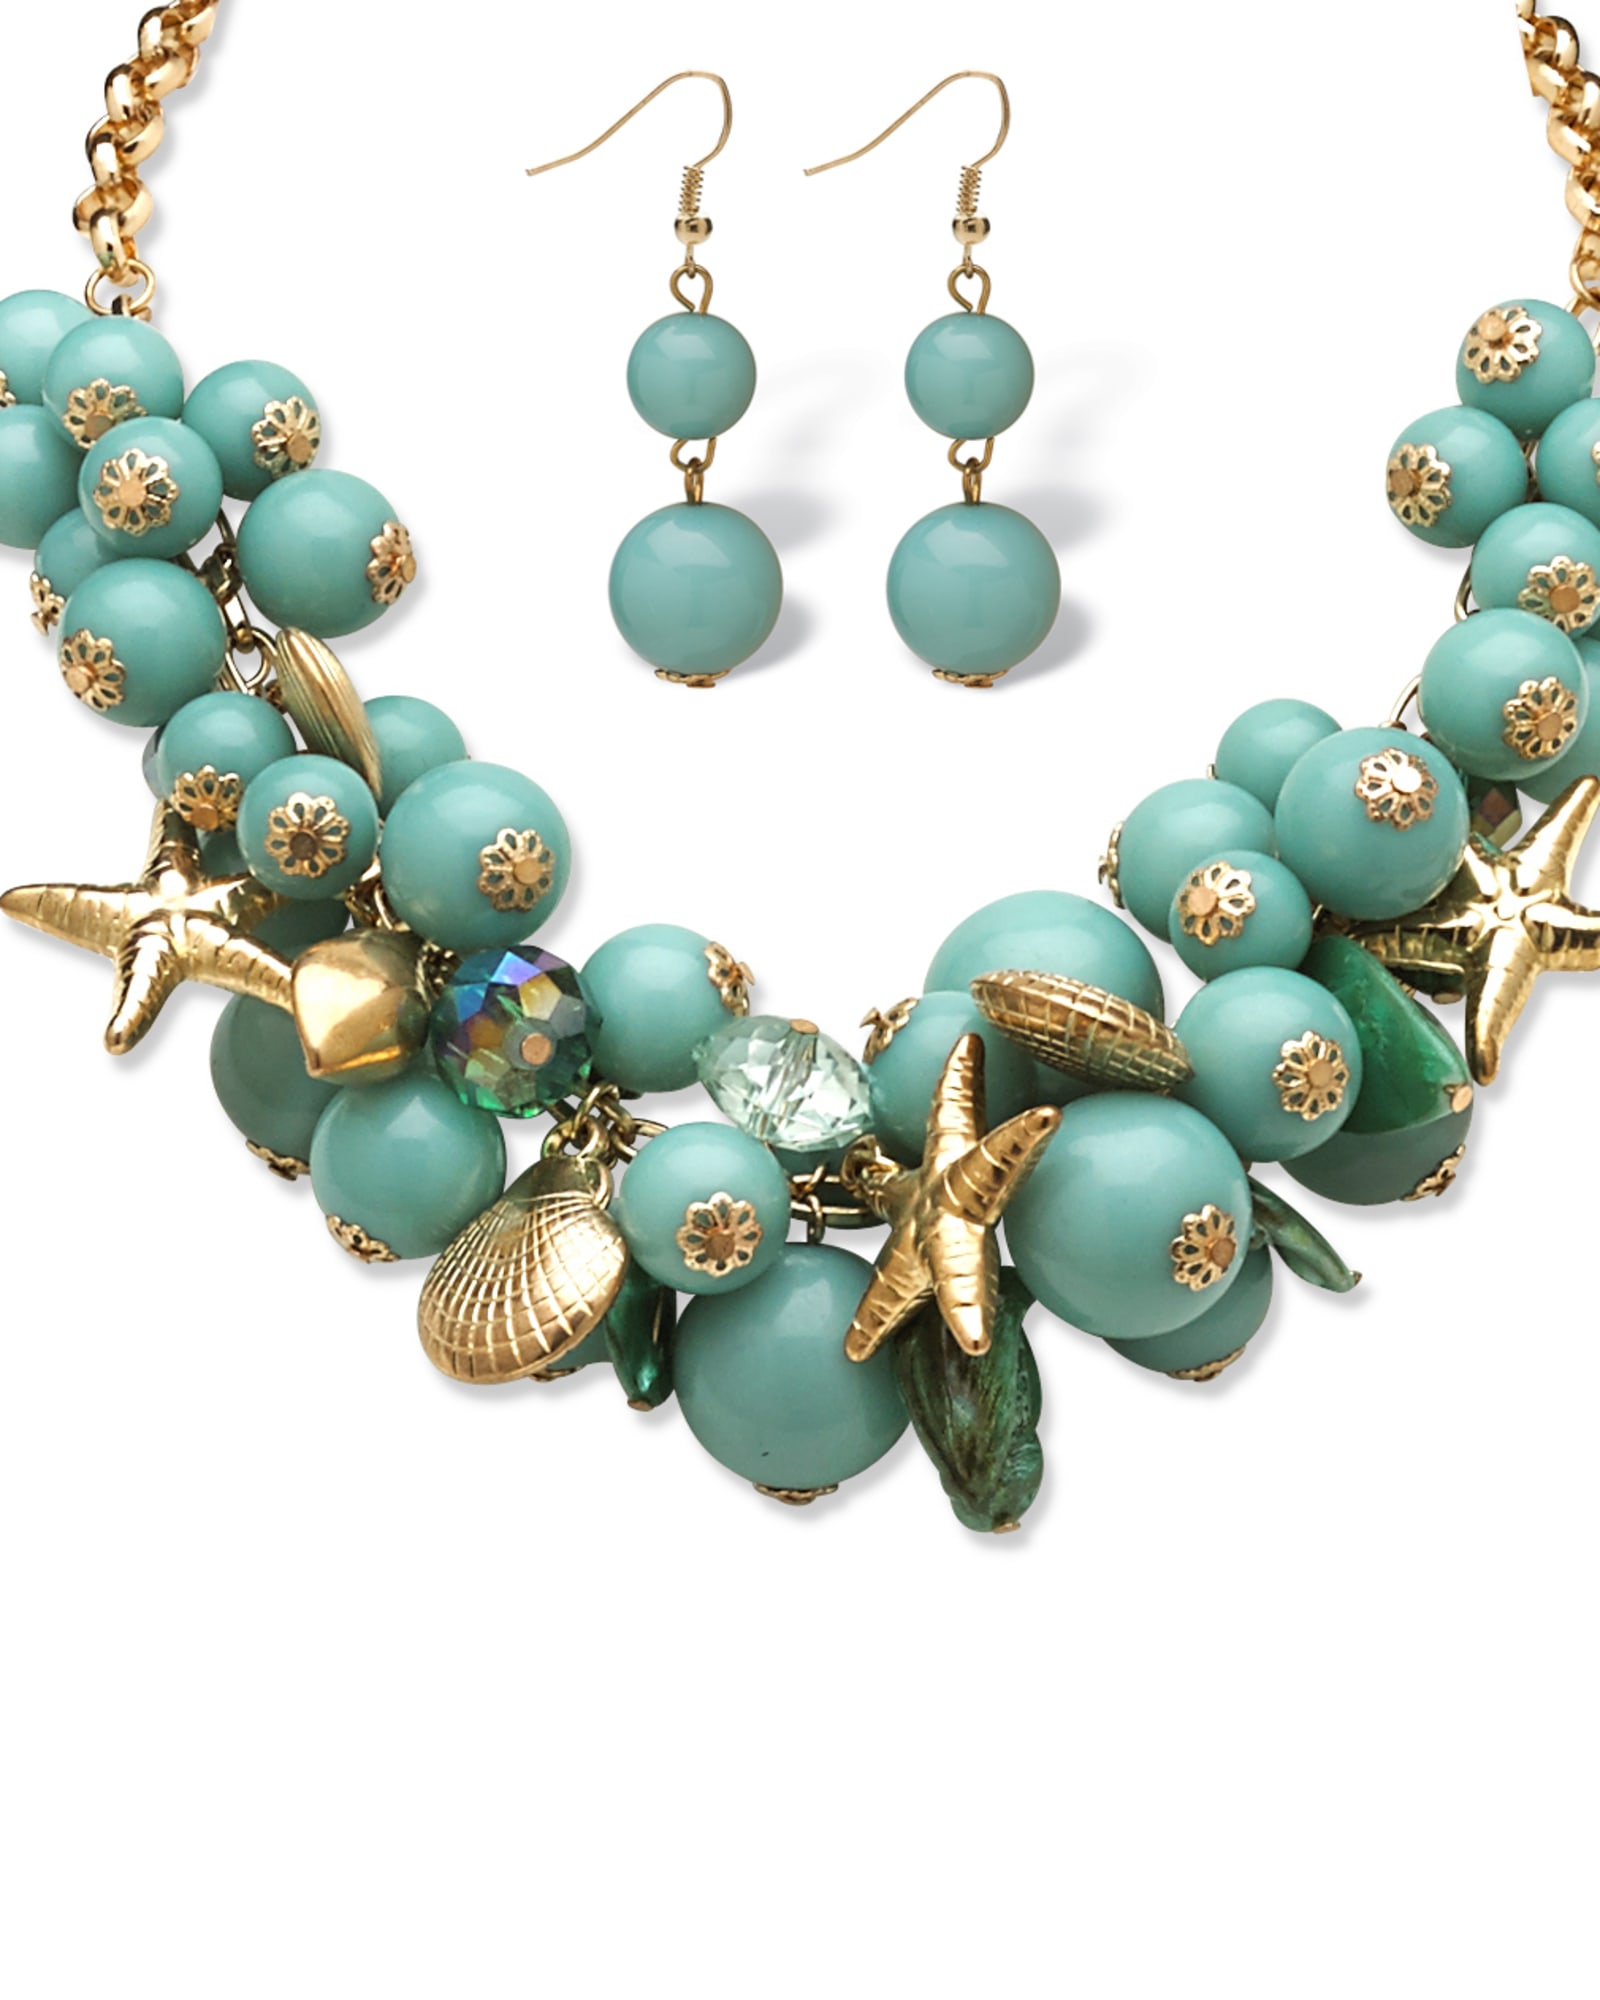 2 Piece Sea Life Jewelry Set in Yellow Gold Tone | Turquoise/Aqua